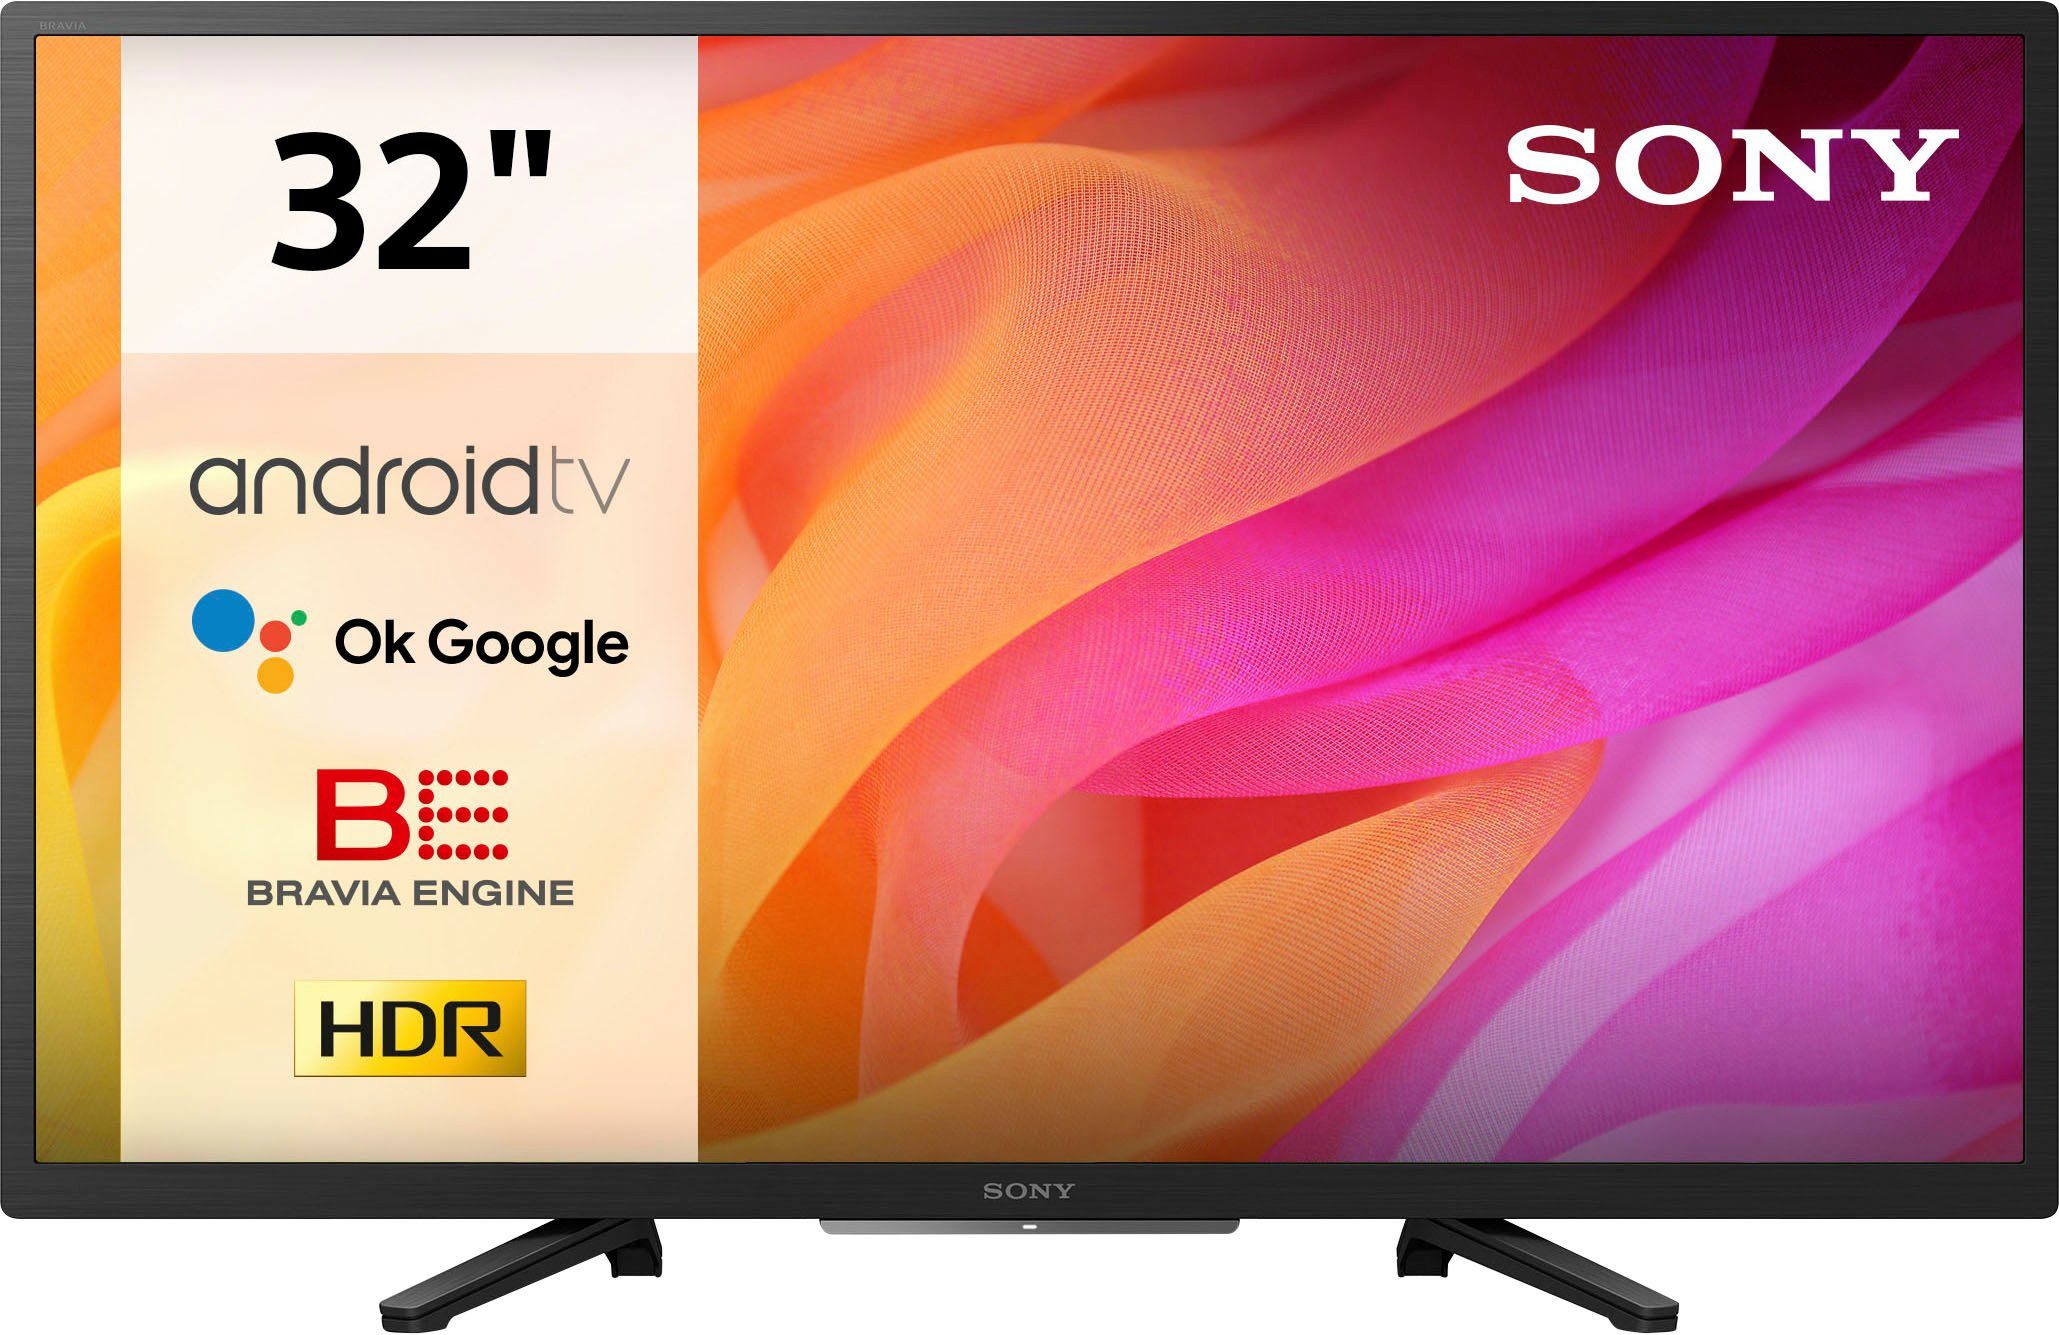 Sony KD-32W800/1 LCD-LED Fernseher (80 cm/32 Zoll, WXGA, Android TV, BRAVIA, HD Heady, Smart TV, Triple Tuner, HDR)